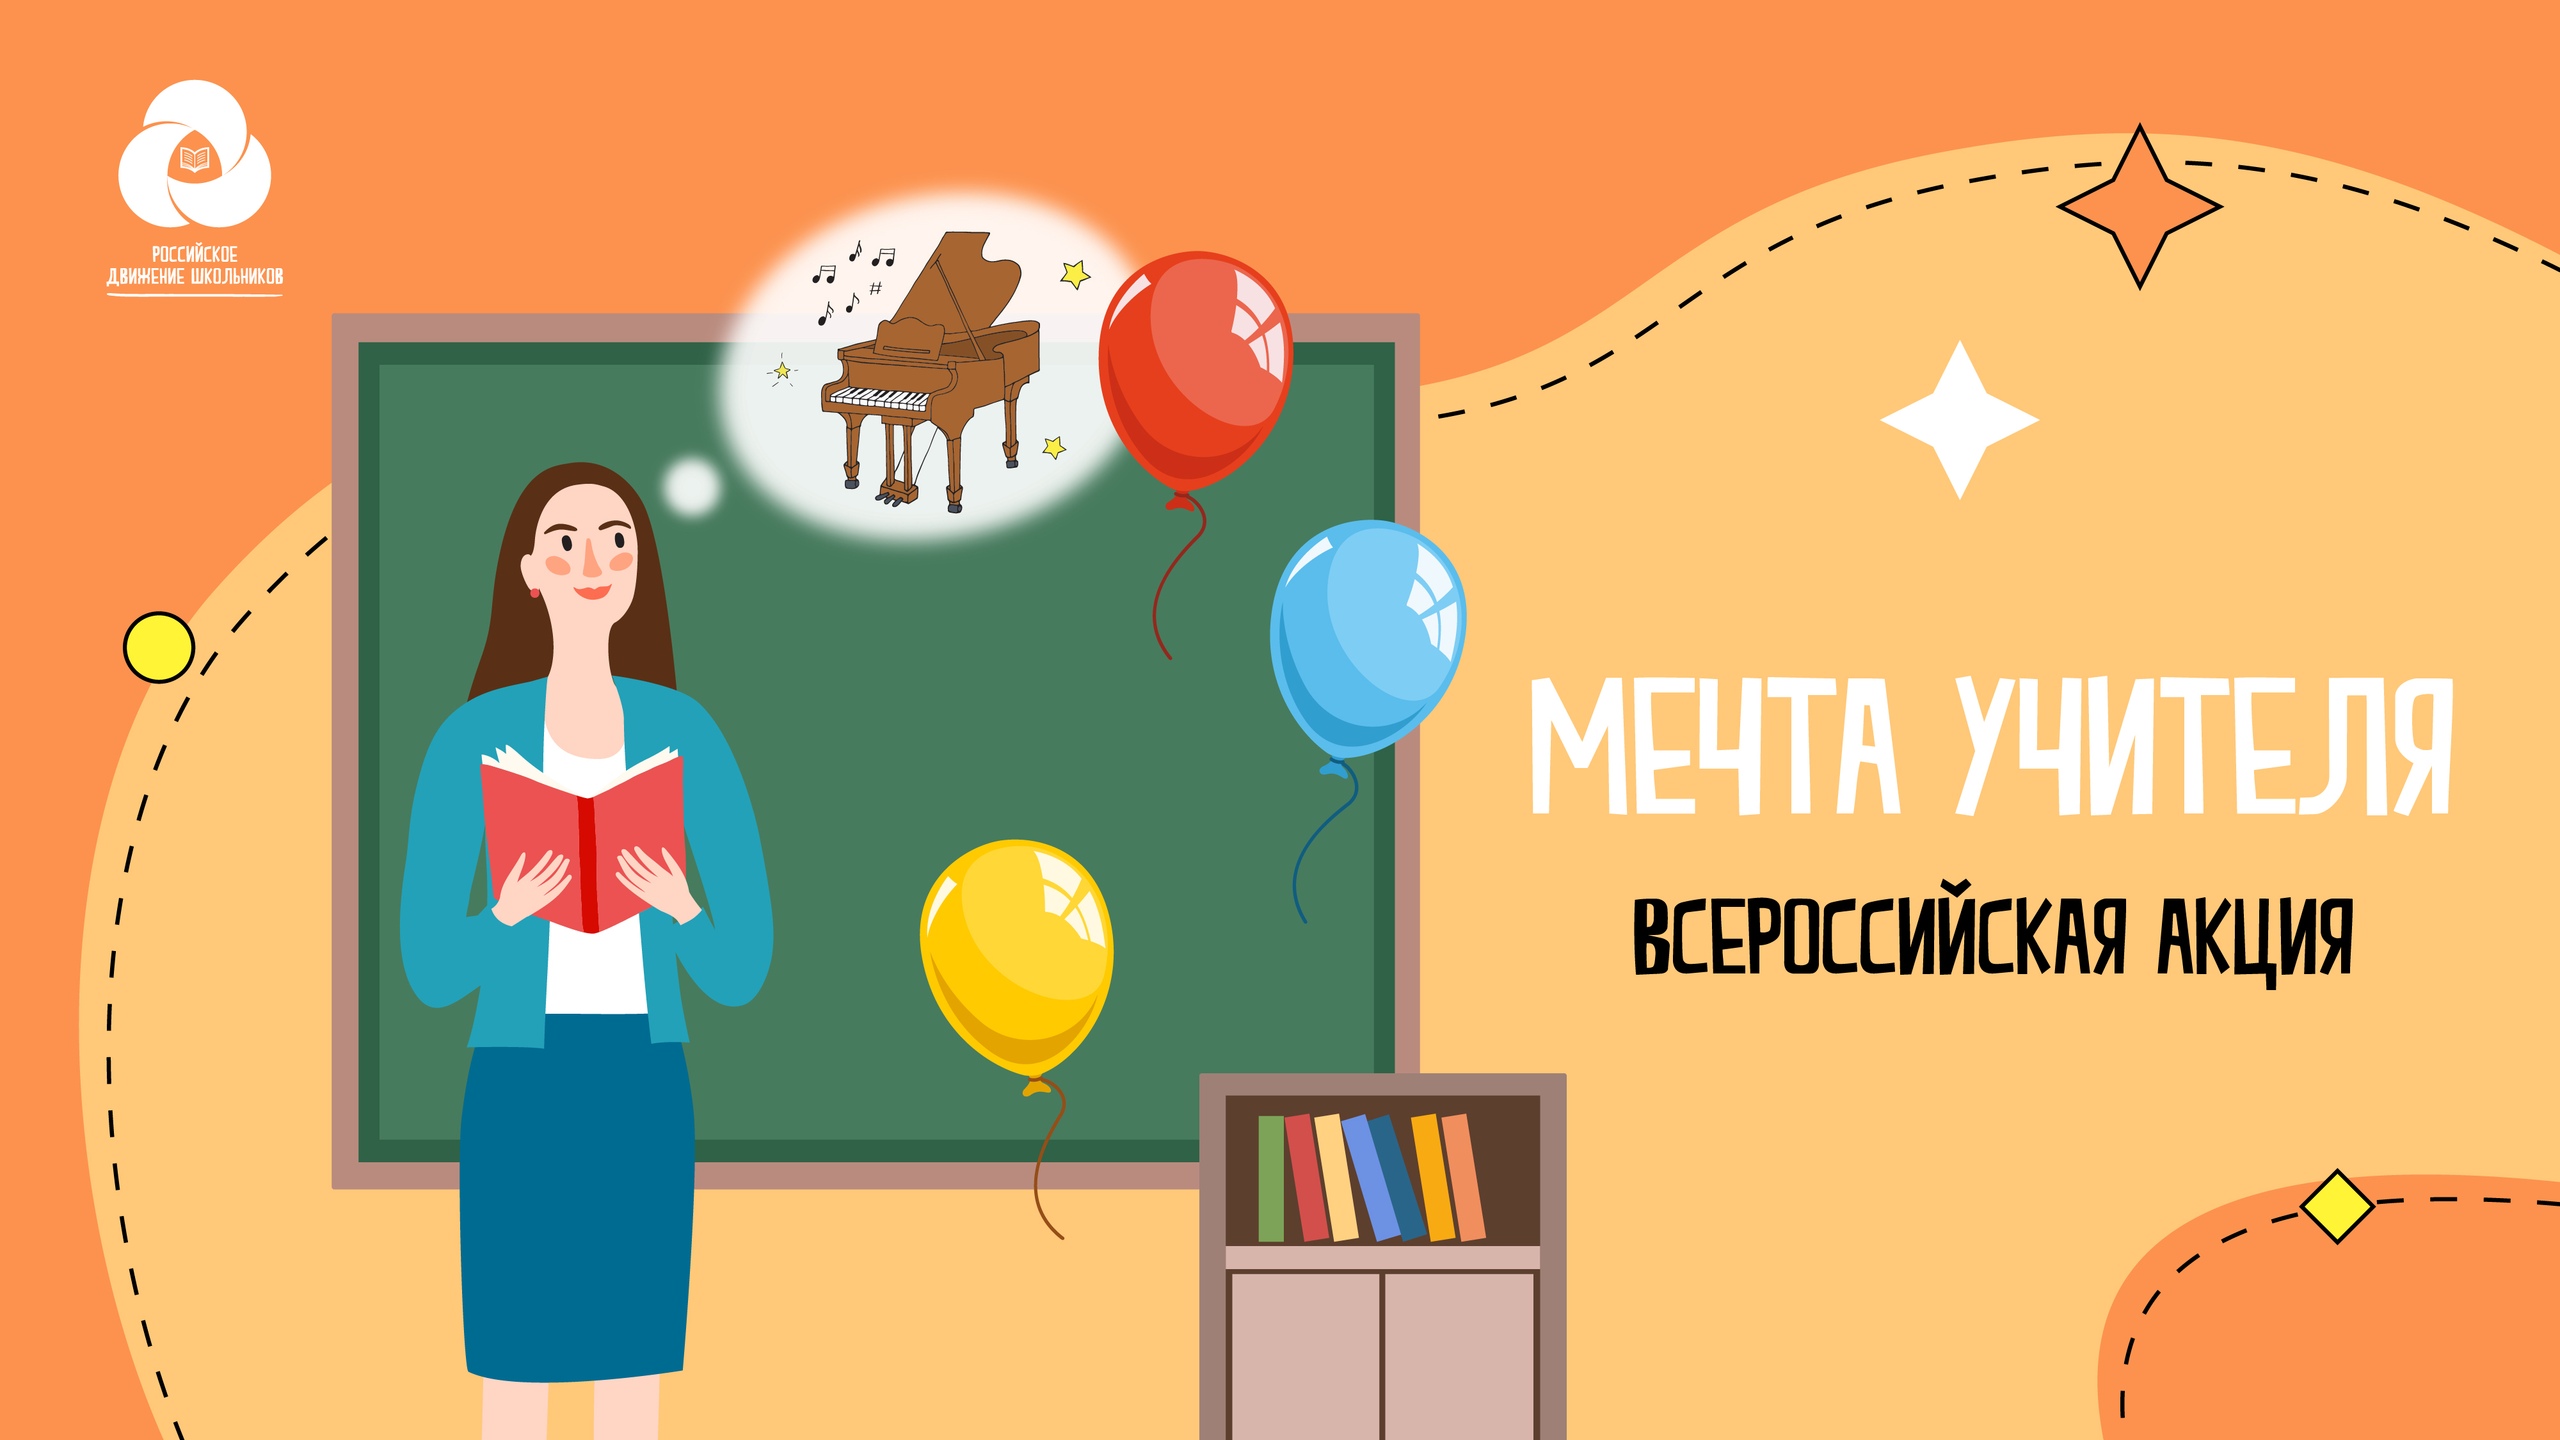 РДШ объявило о старте акции "Мечта учителя"